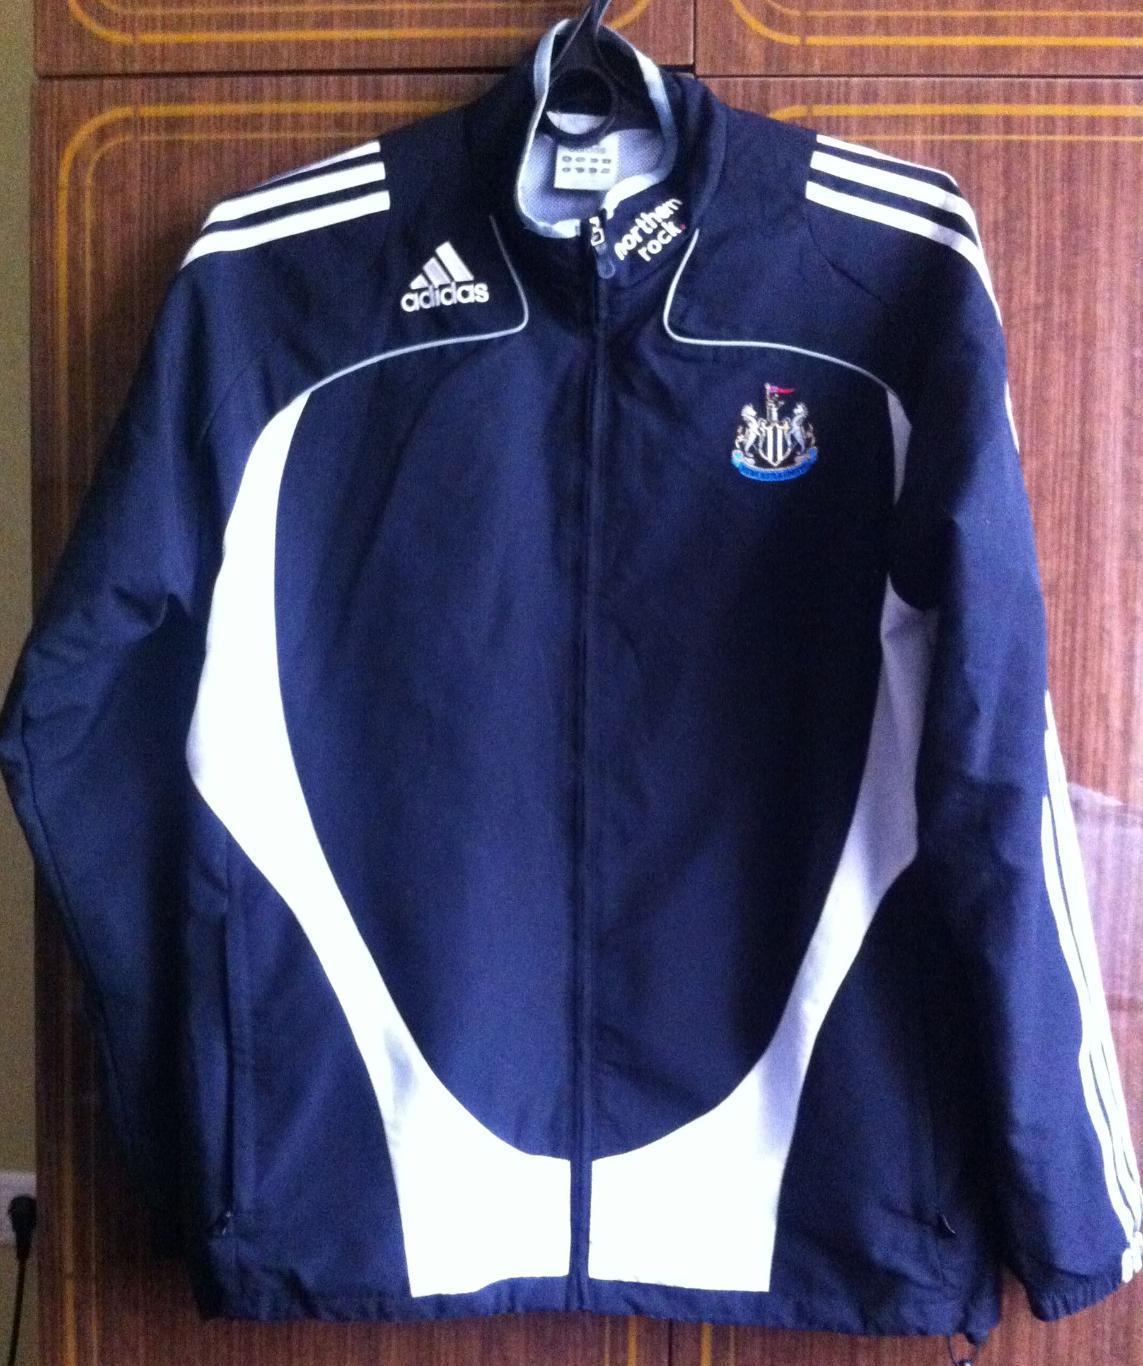 Представительский костюм. Ньюкасл Юнайтед. Newcastle United (2006)